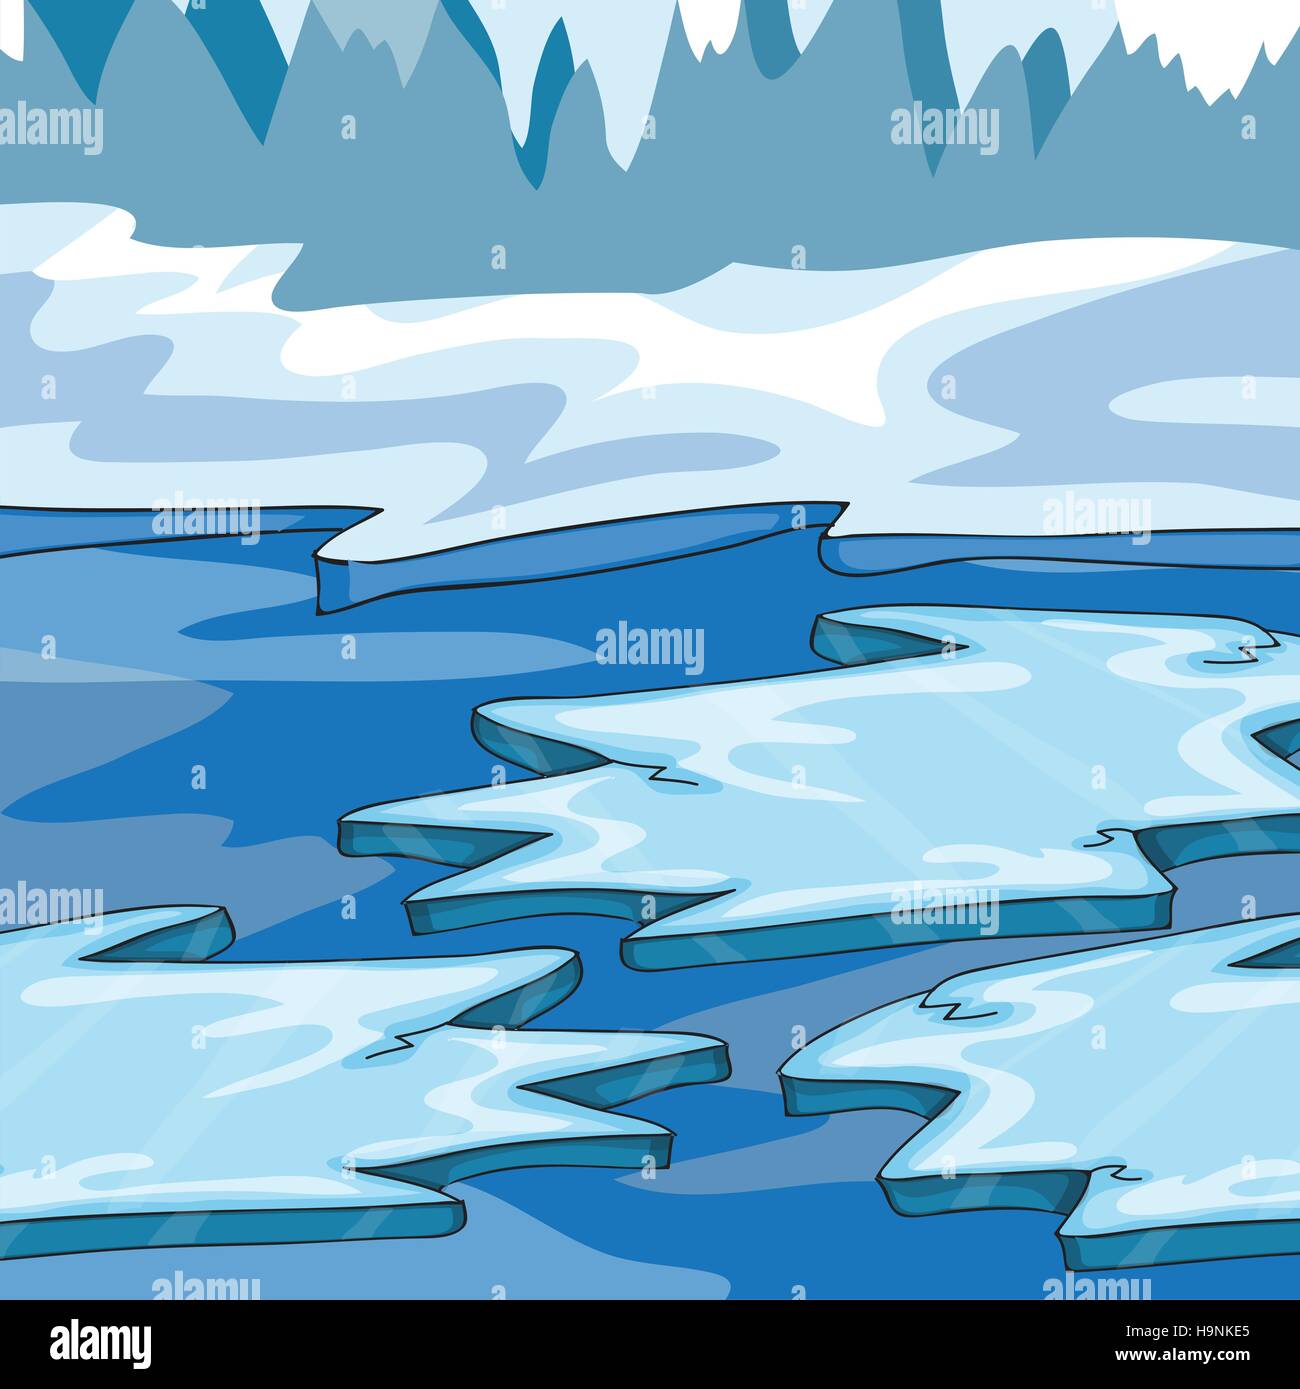 Islanda - Cartoon Illustrazione Vettoriale - ice floes nell'oceano Illustrazione Vettoriale